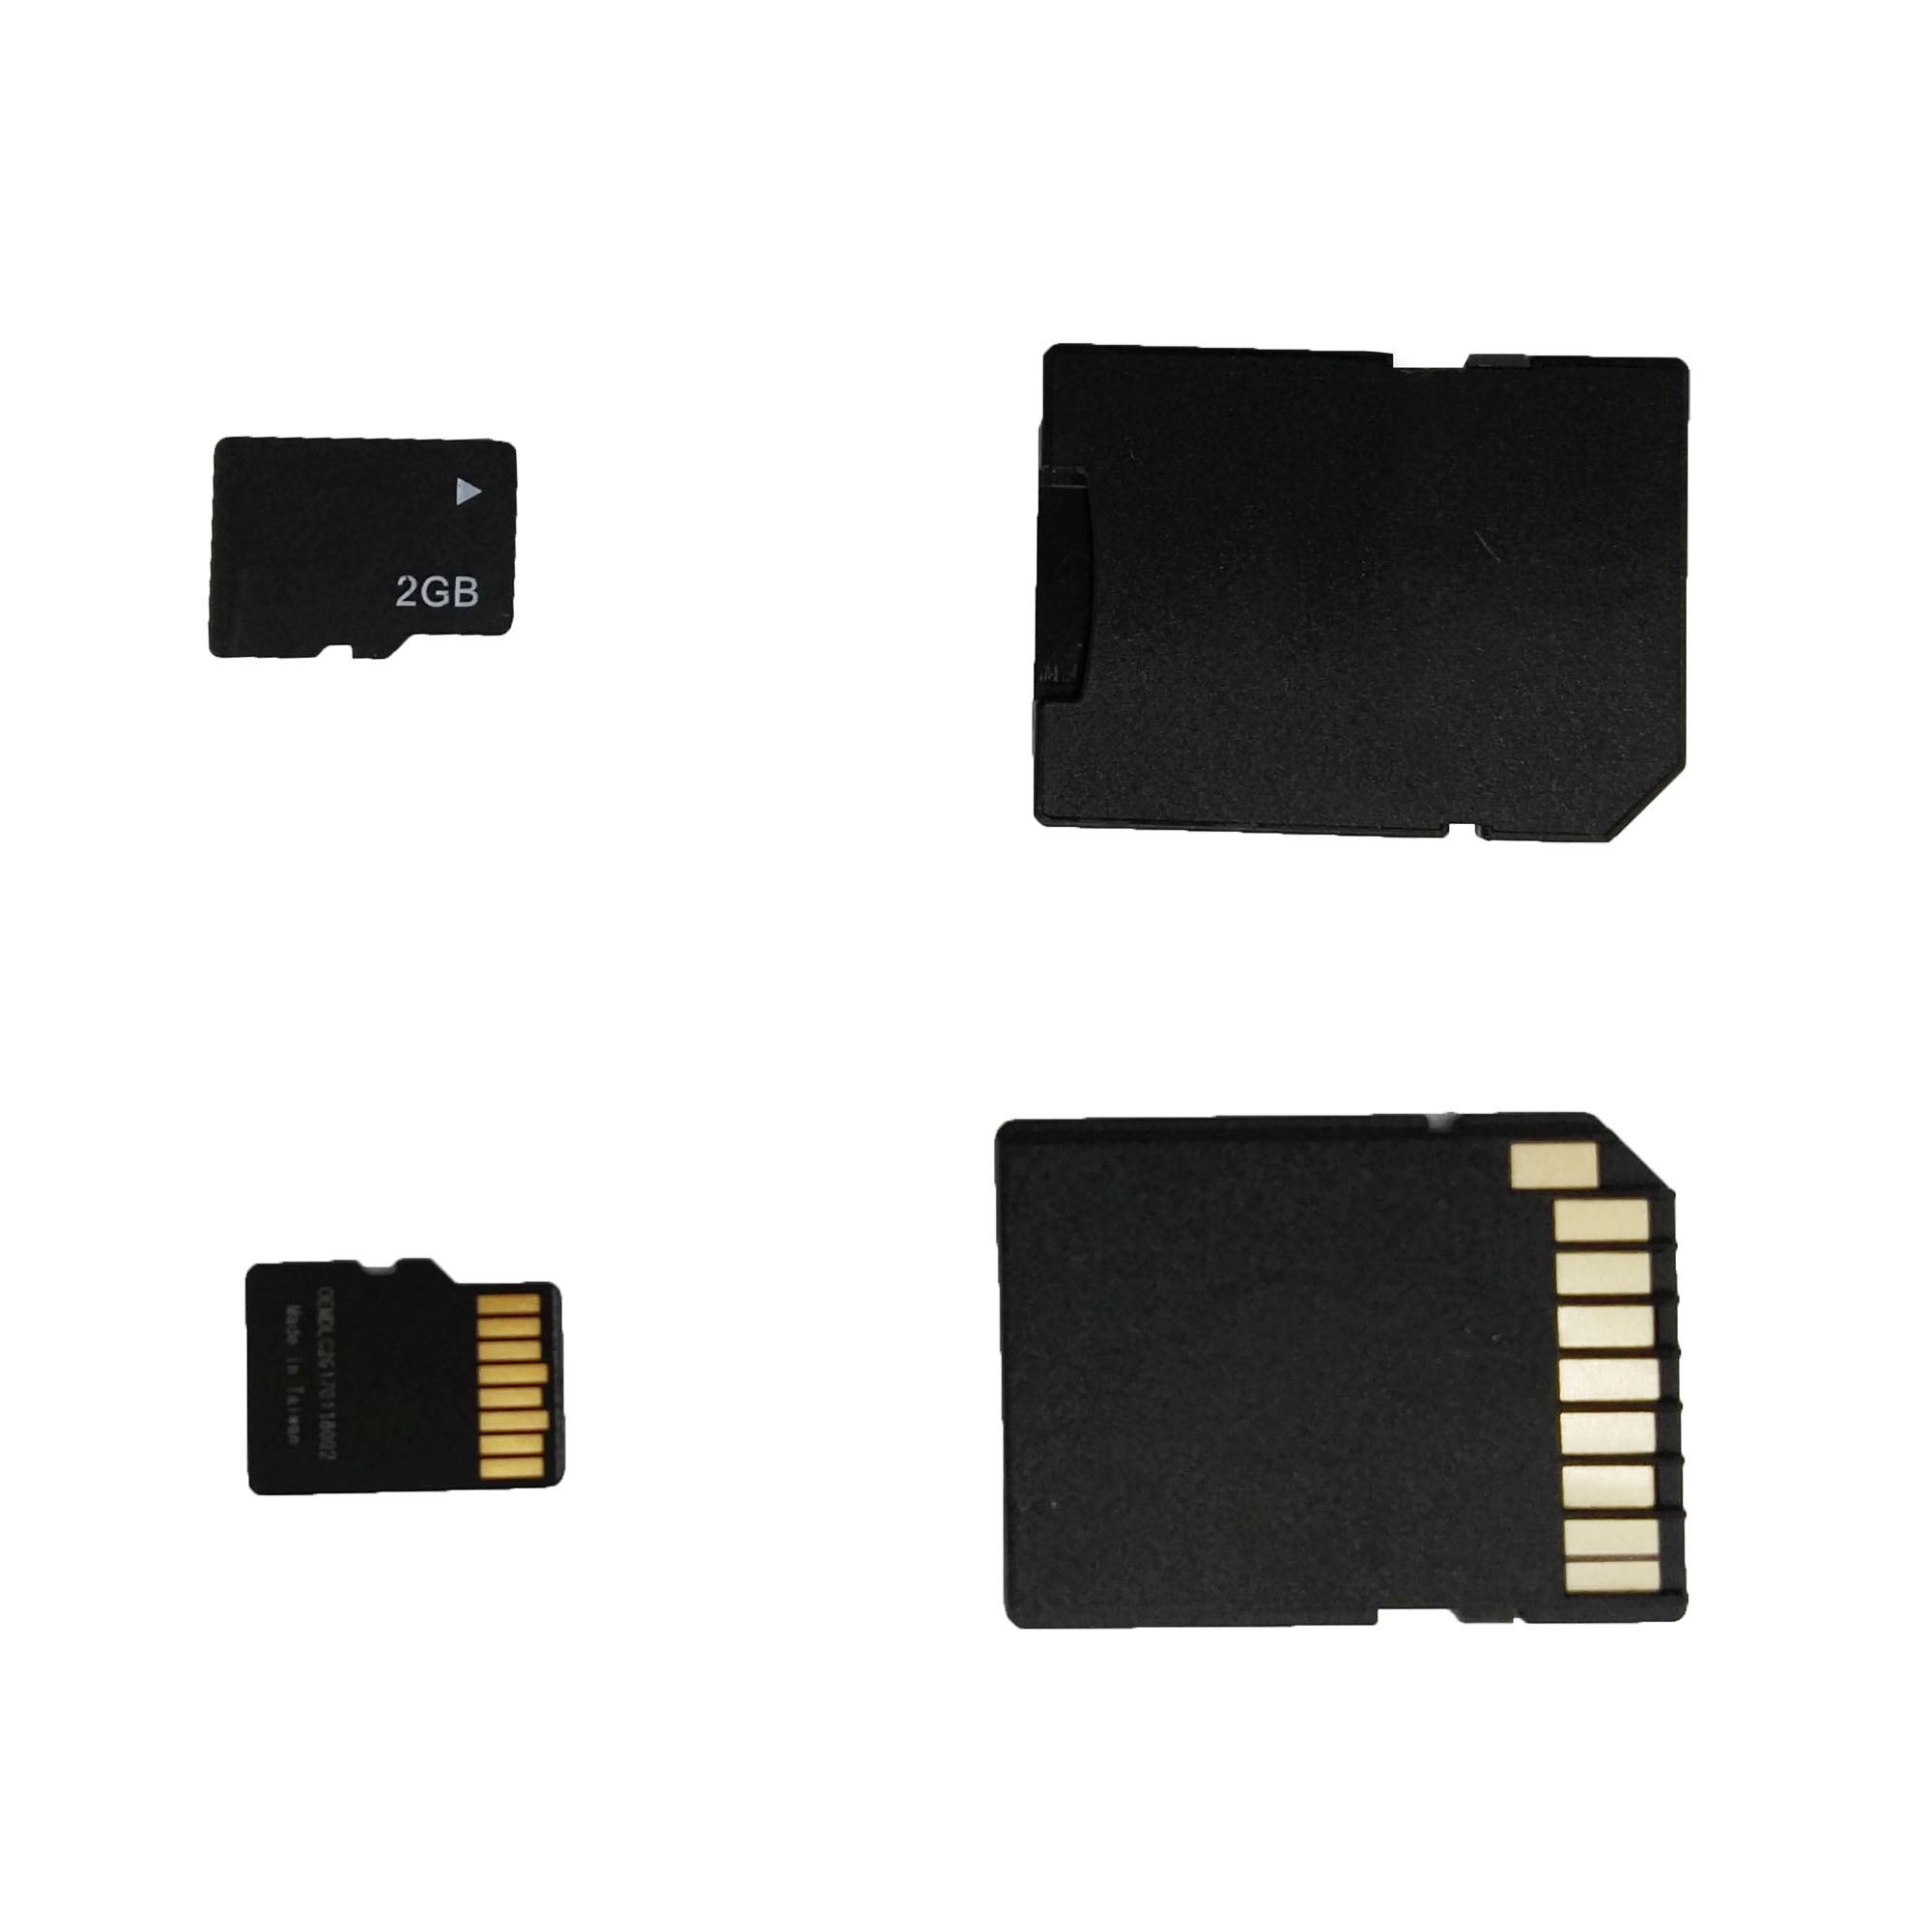 GL-AAA1110 2GB Micro SDHC Flash Card Memory TF Card with Adapter